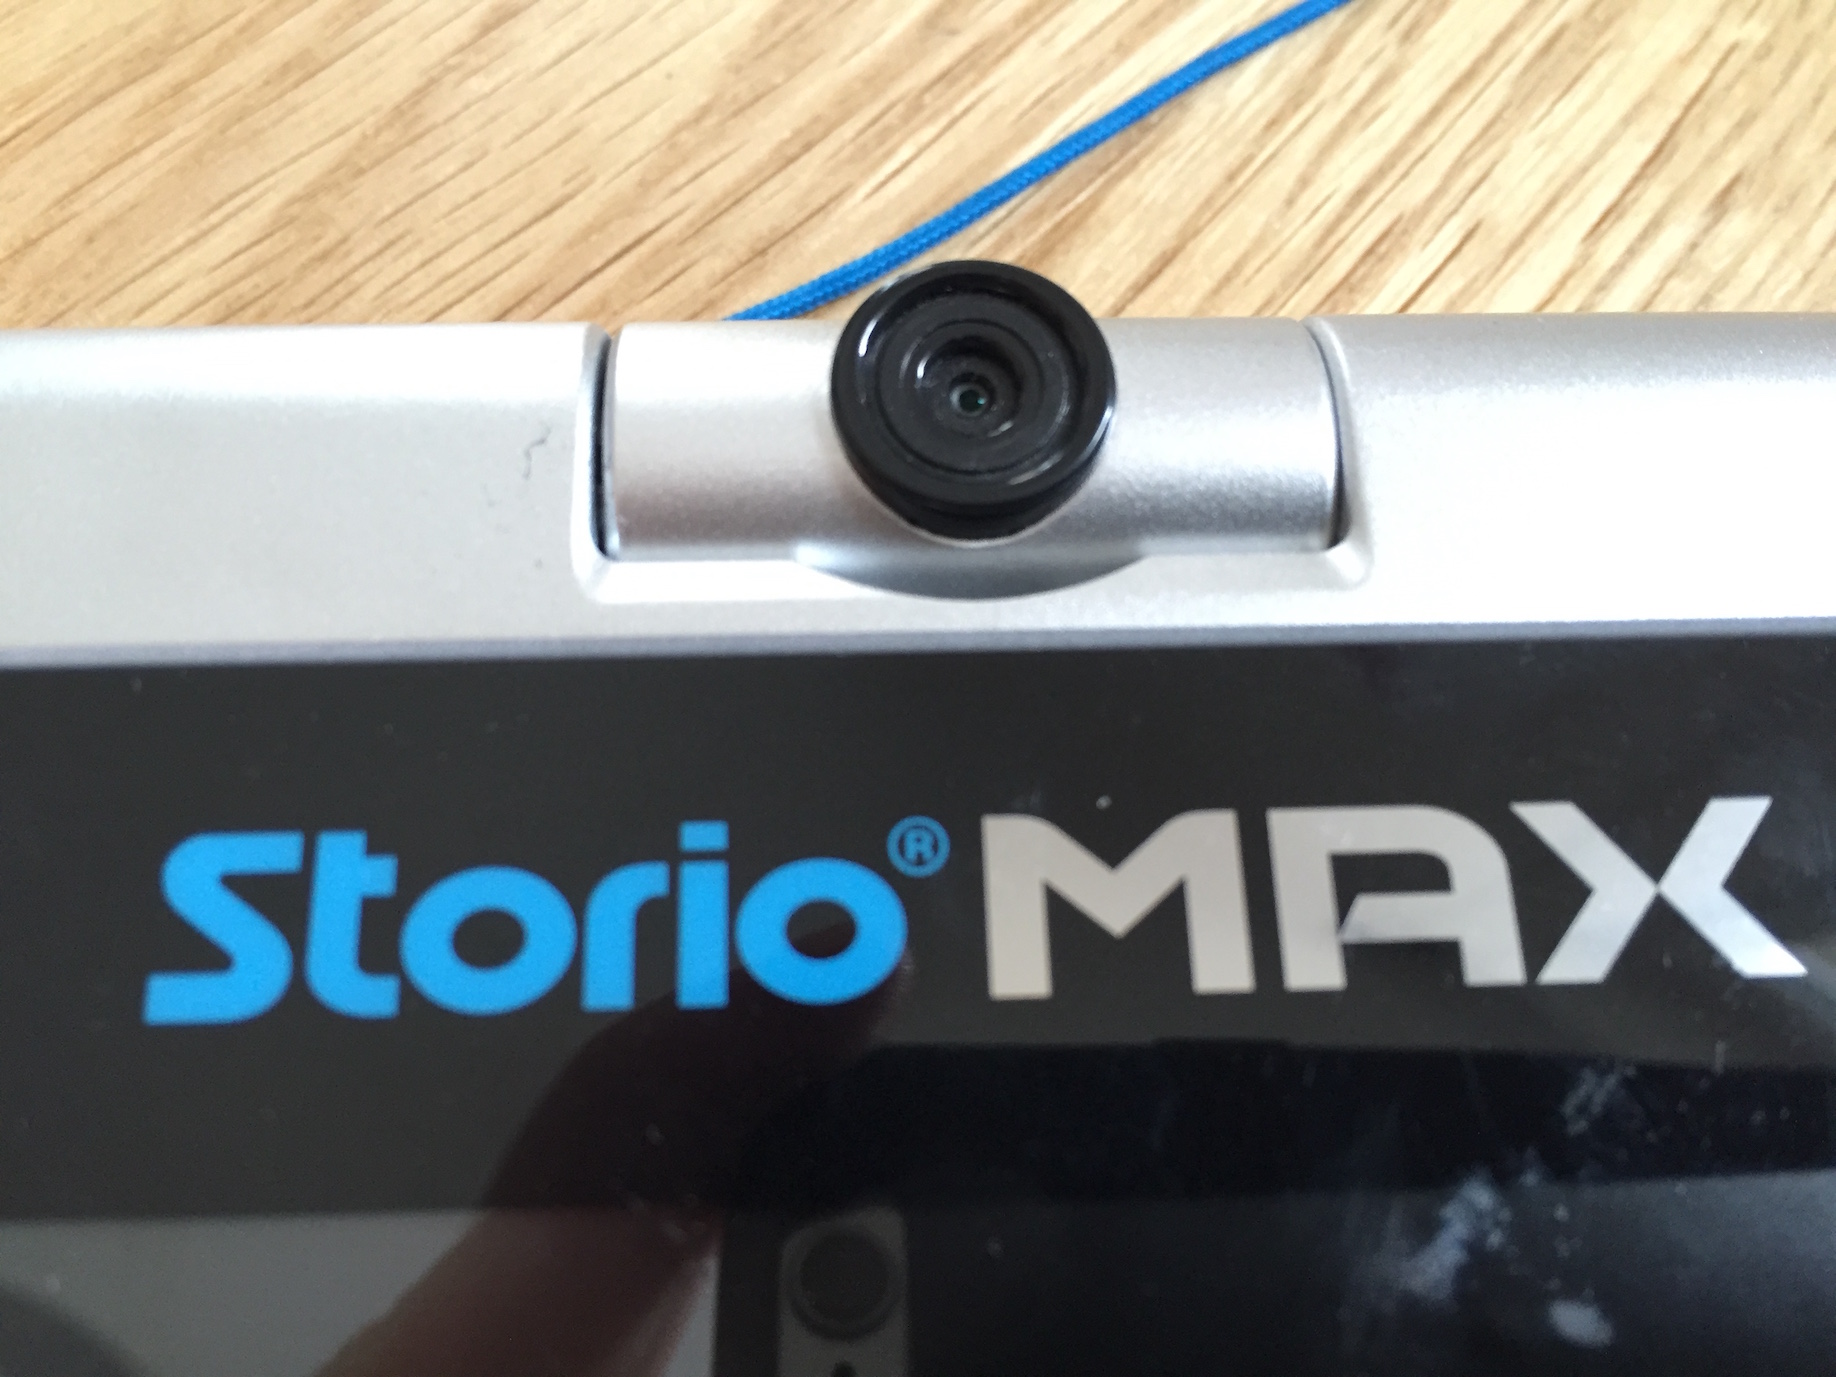 Storio Max : grand écran, robustesse, et quelques bons contenus